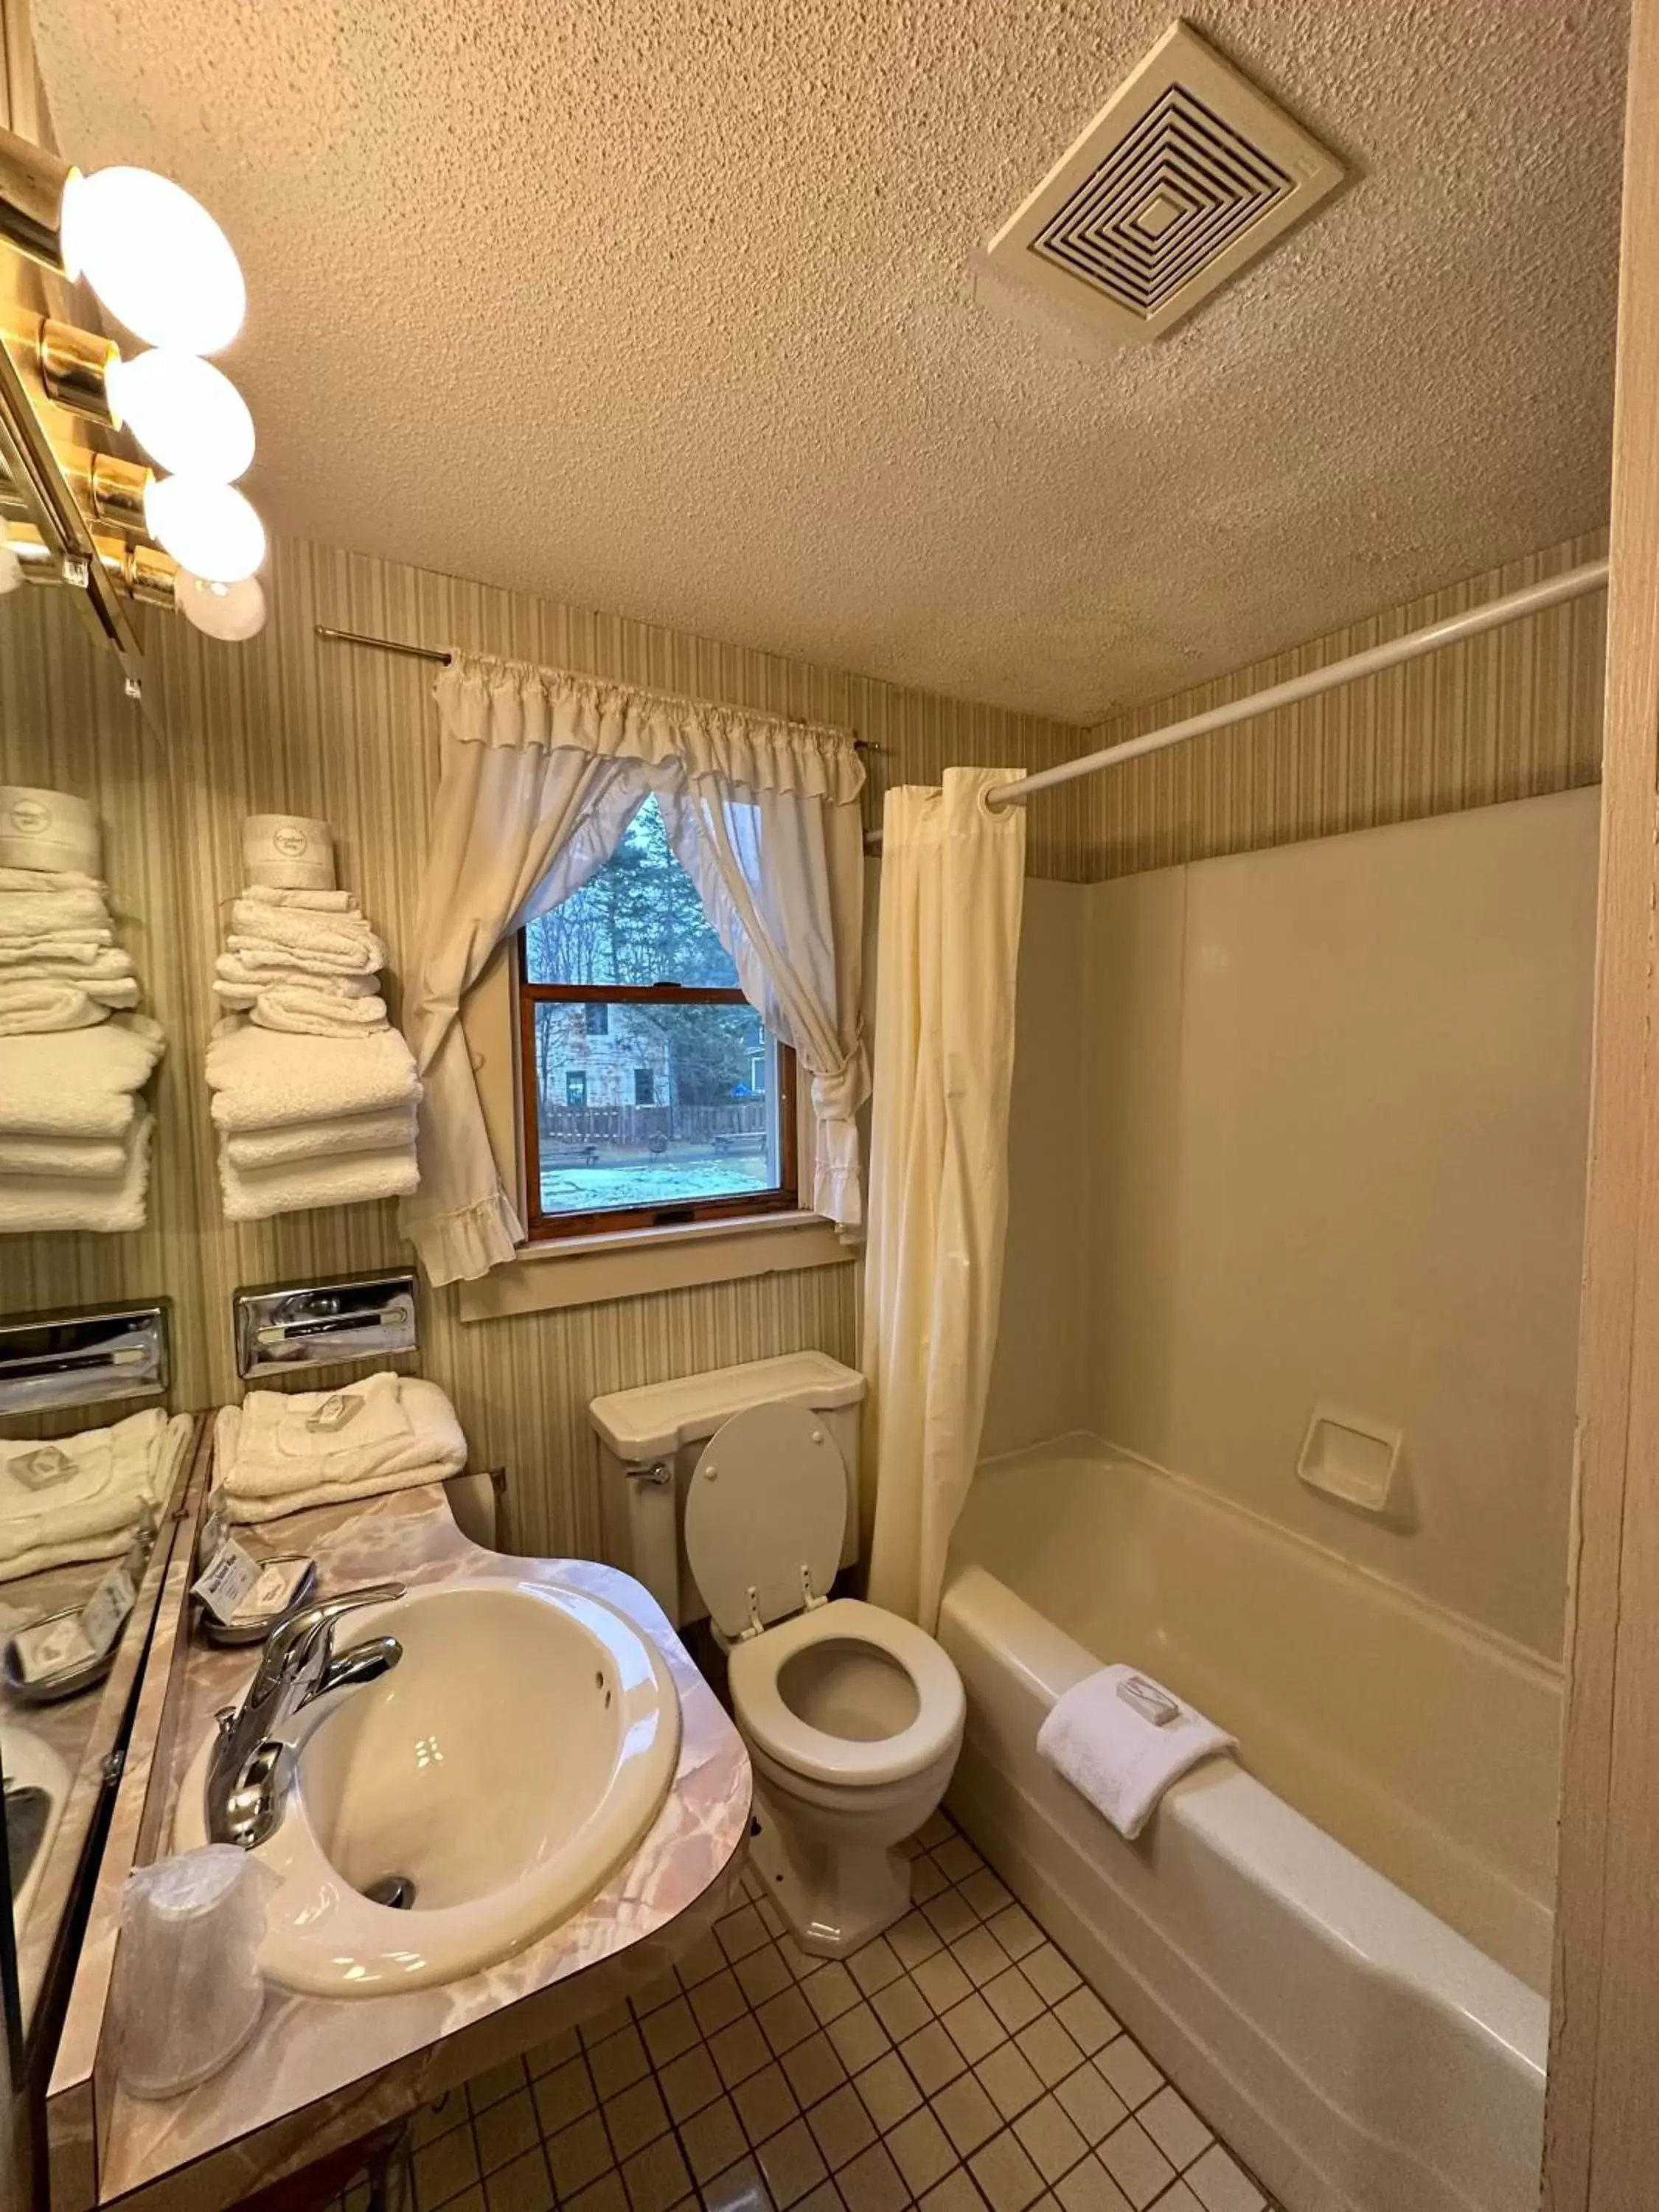 Photo of the whole room, Bathroom in Maple Leaf Inn Lake Placid